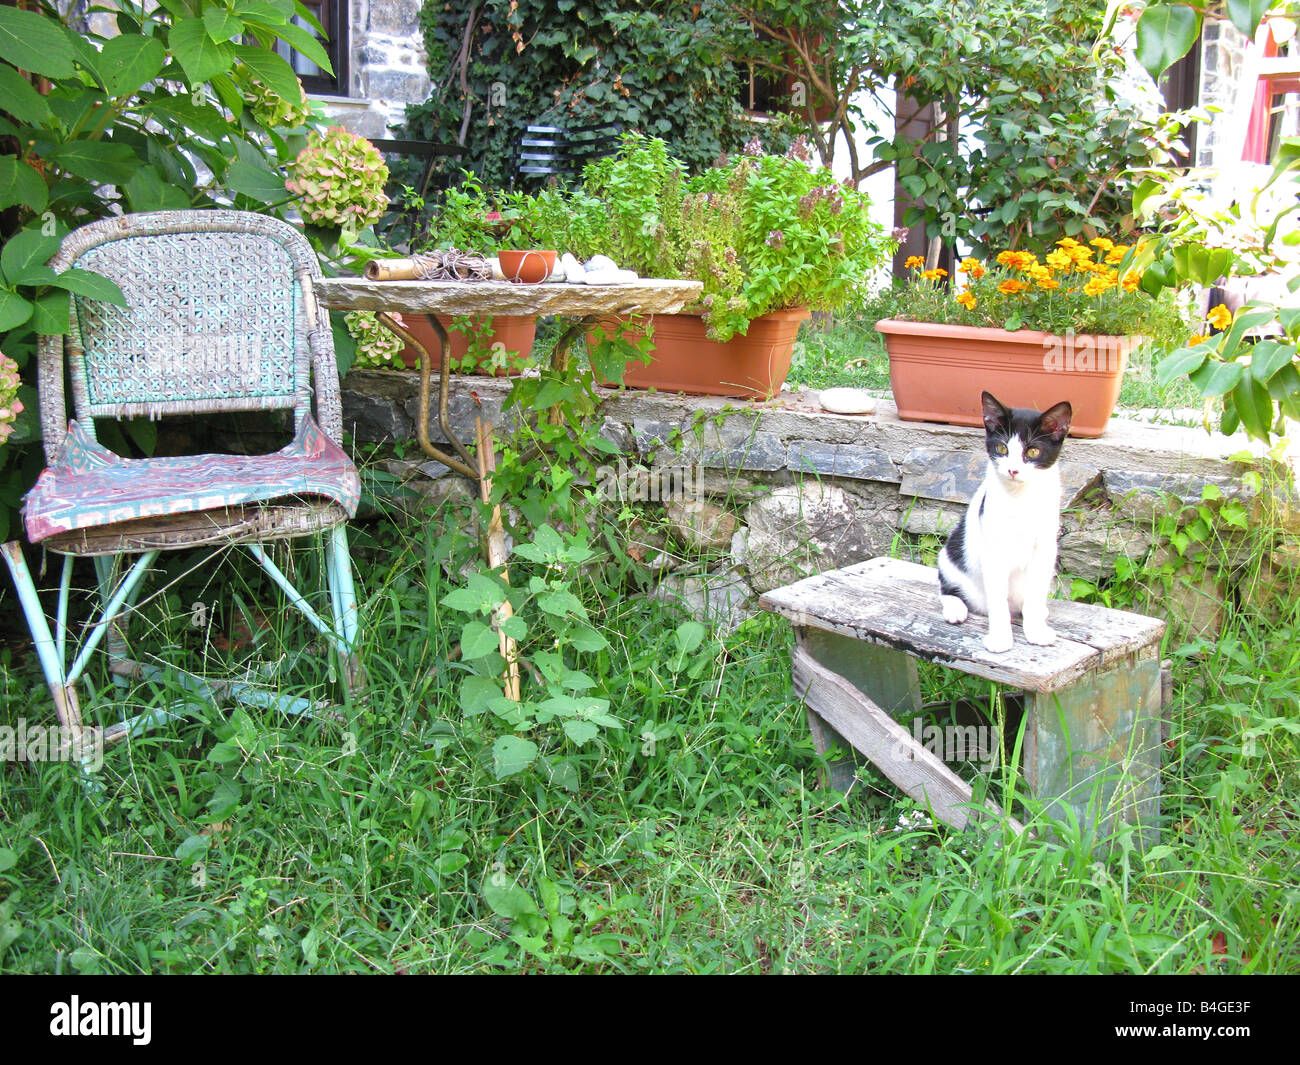 GREECE. The Pelion Peninsula. A rustic garden scene in the village of Damouchari. Stock Photo